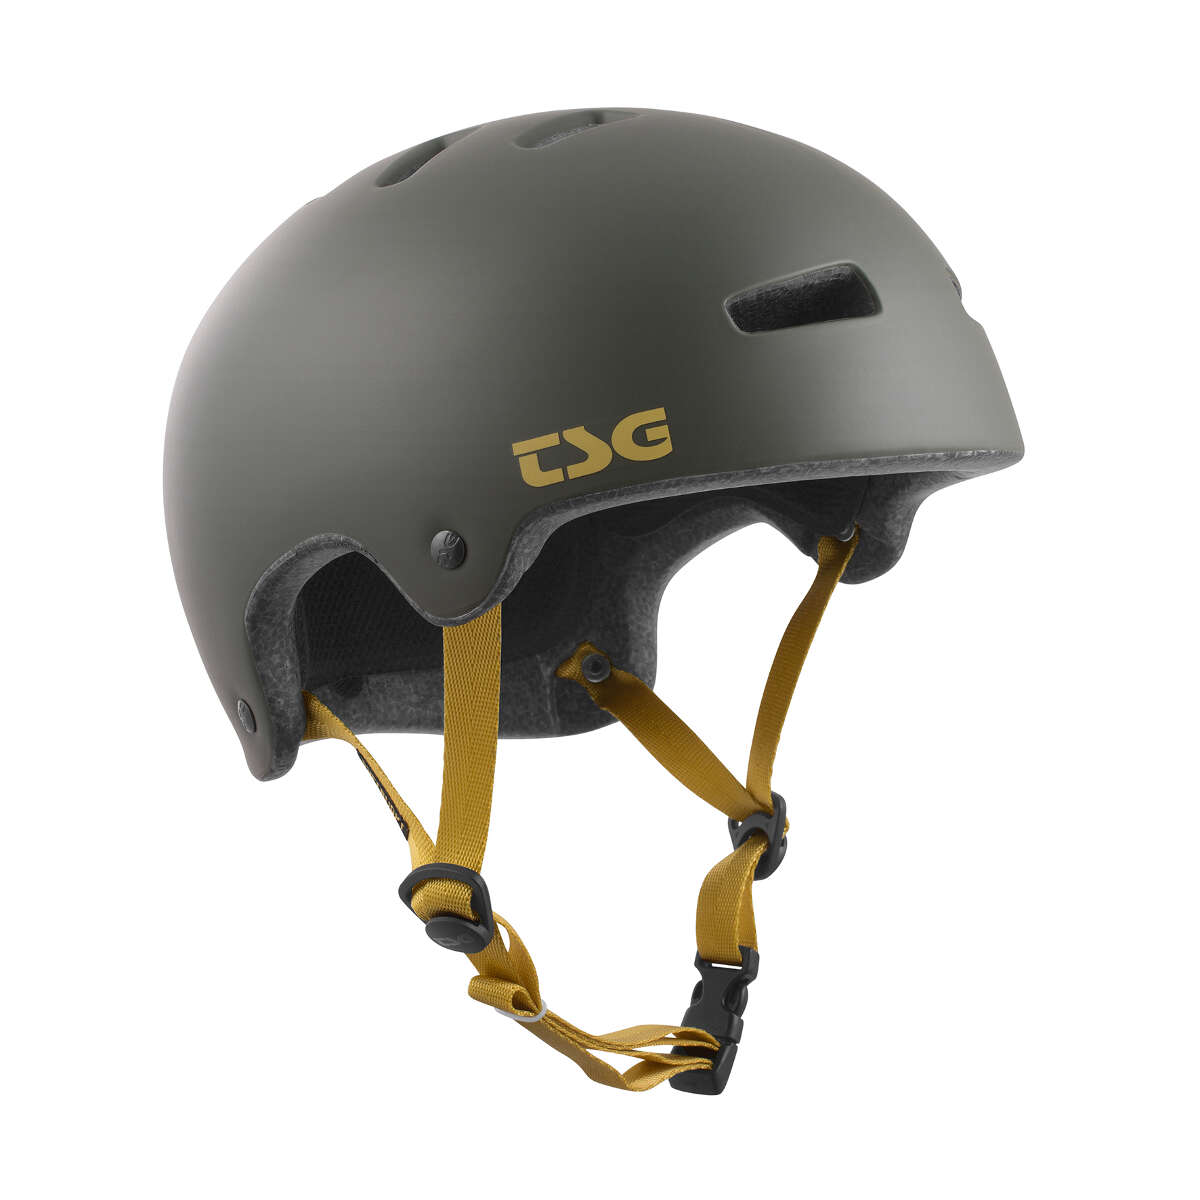 TSG BMX/Dirt Helmet Superlight Solid Color - Satin Stone Green